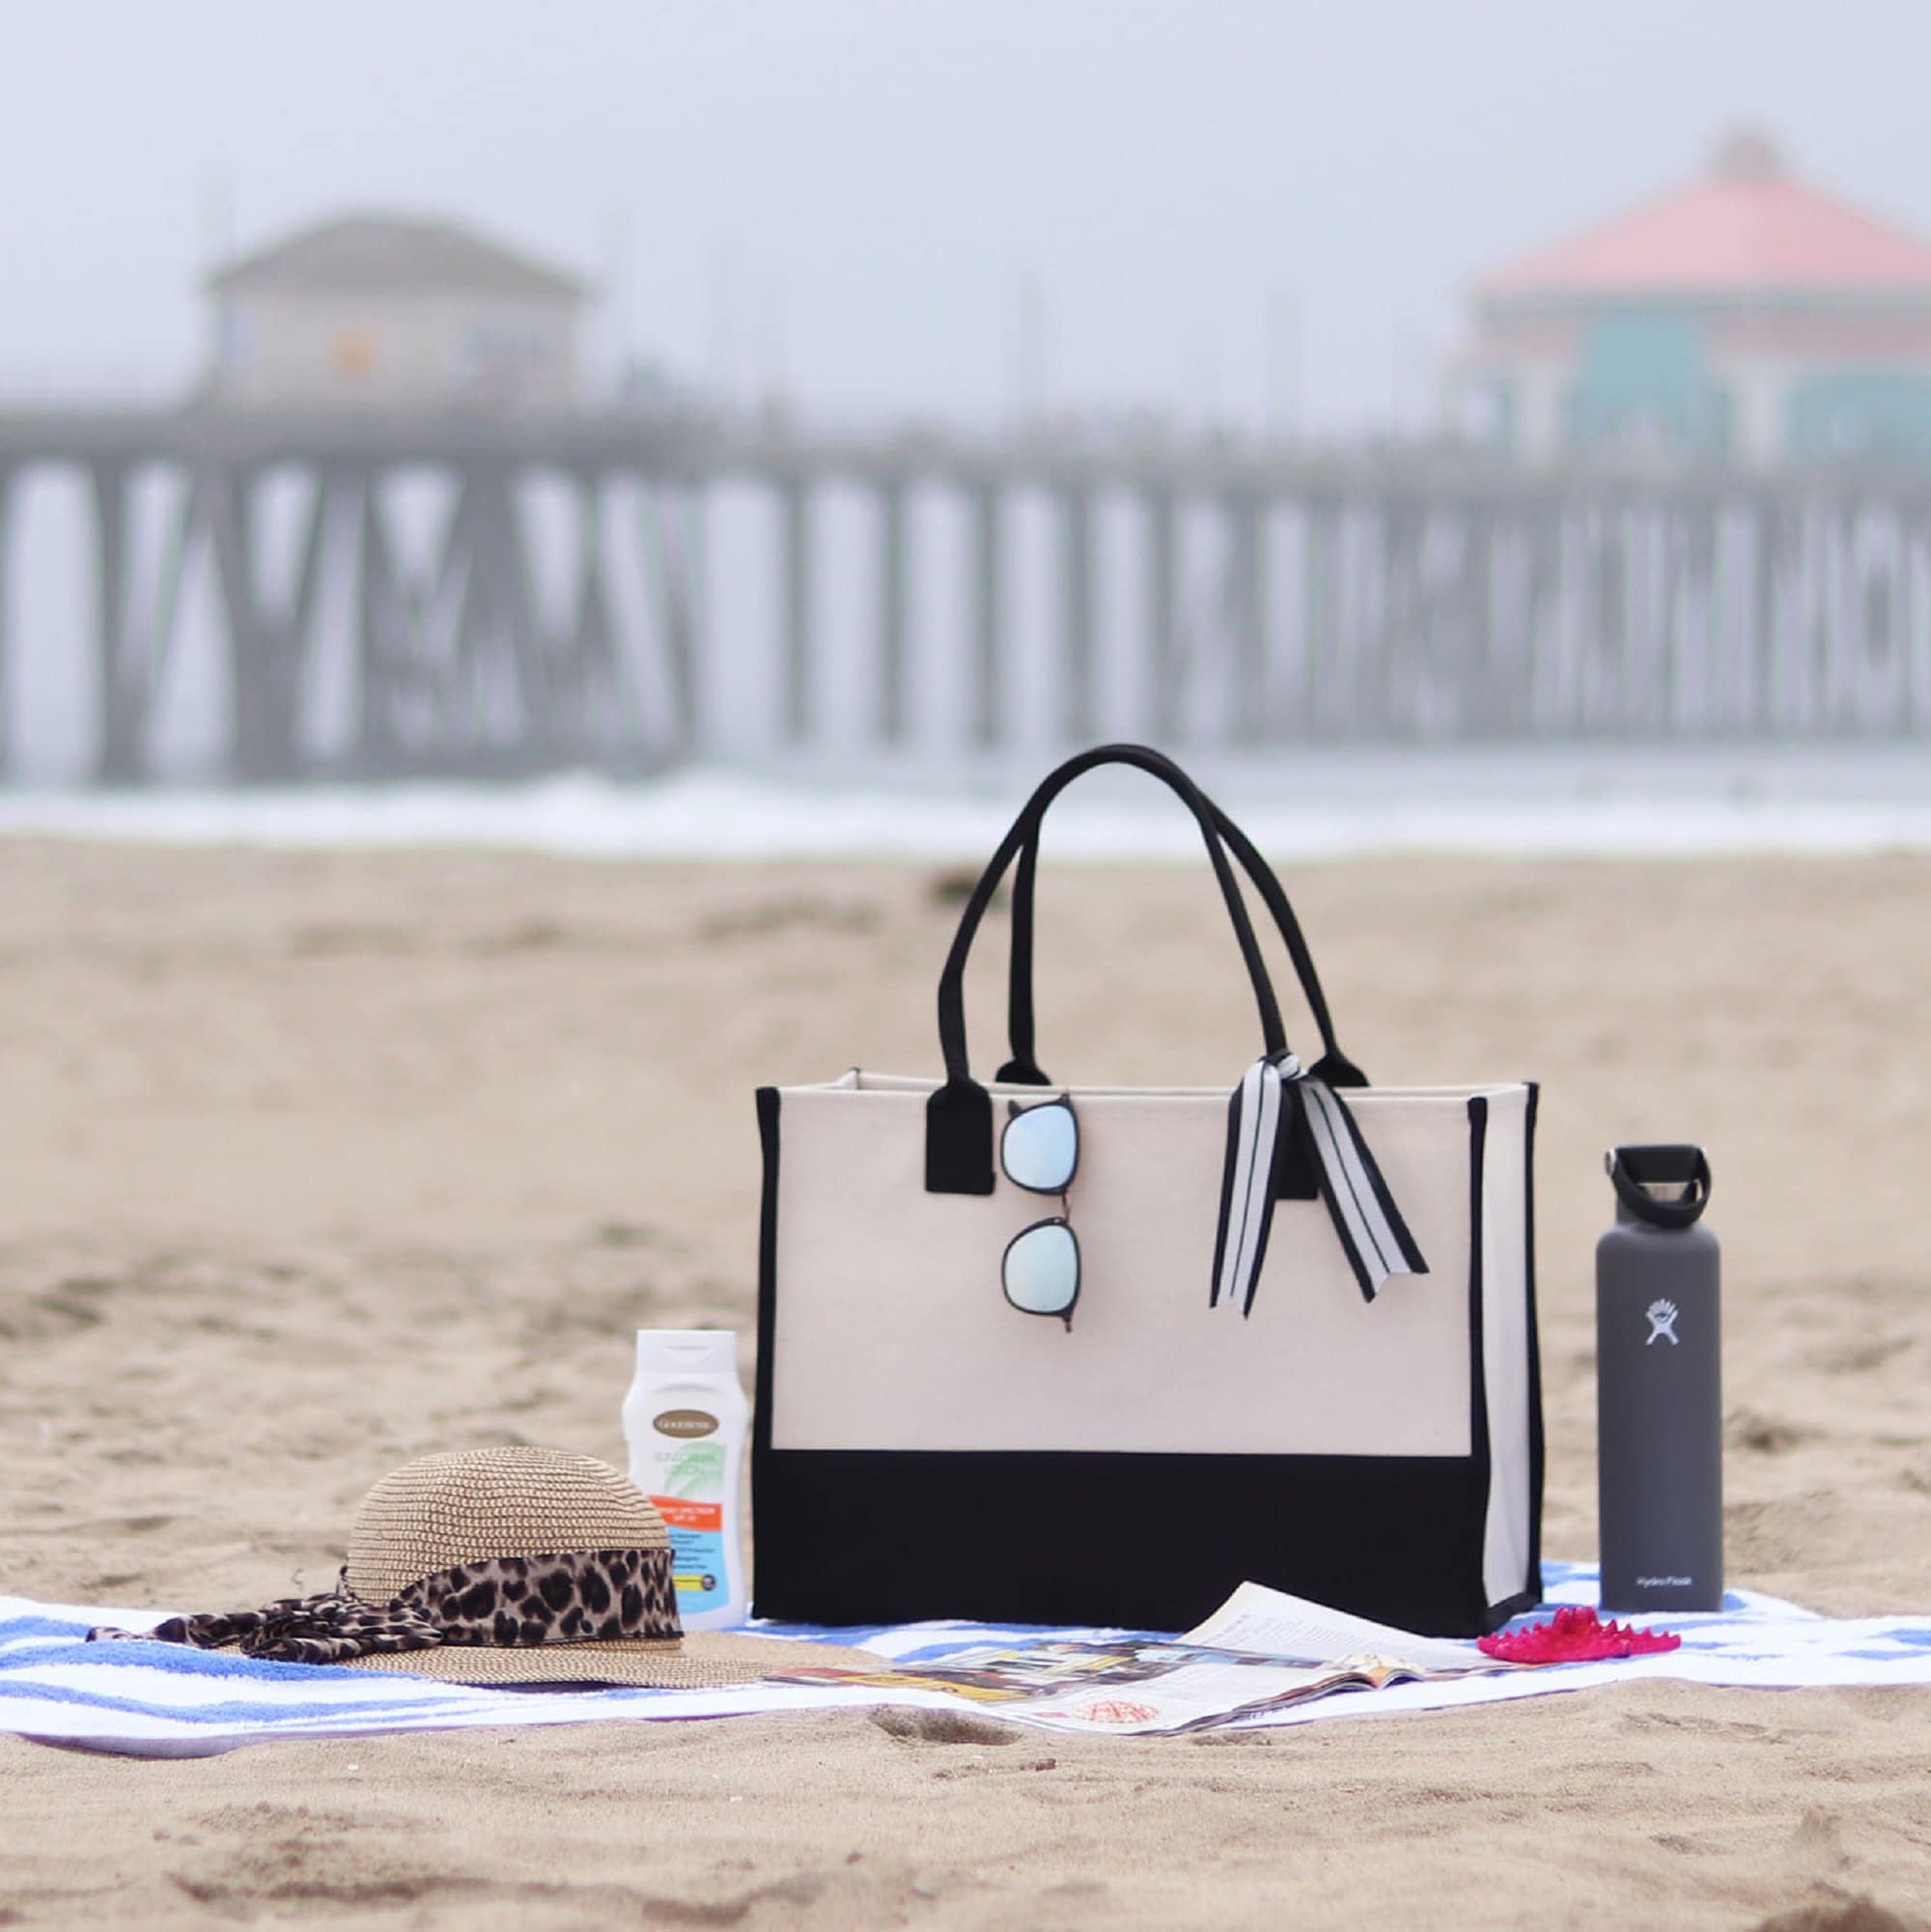 Getaway Beach Tote Bag - Large Chic Tote Bag - Gift for Her - Vacation Tote Bag - Weekender Bag - Travel Tote